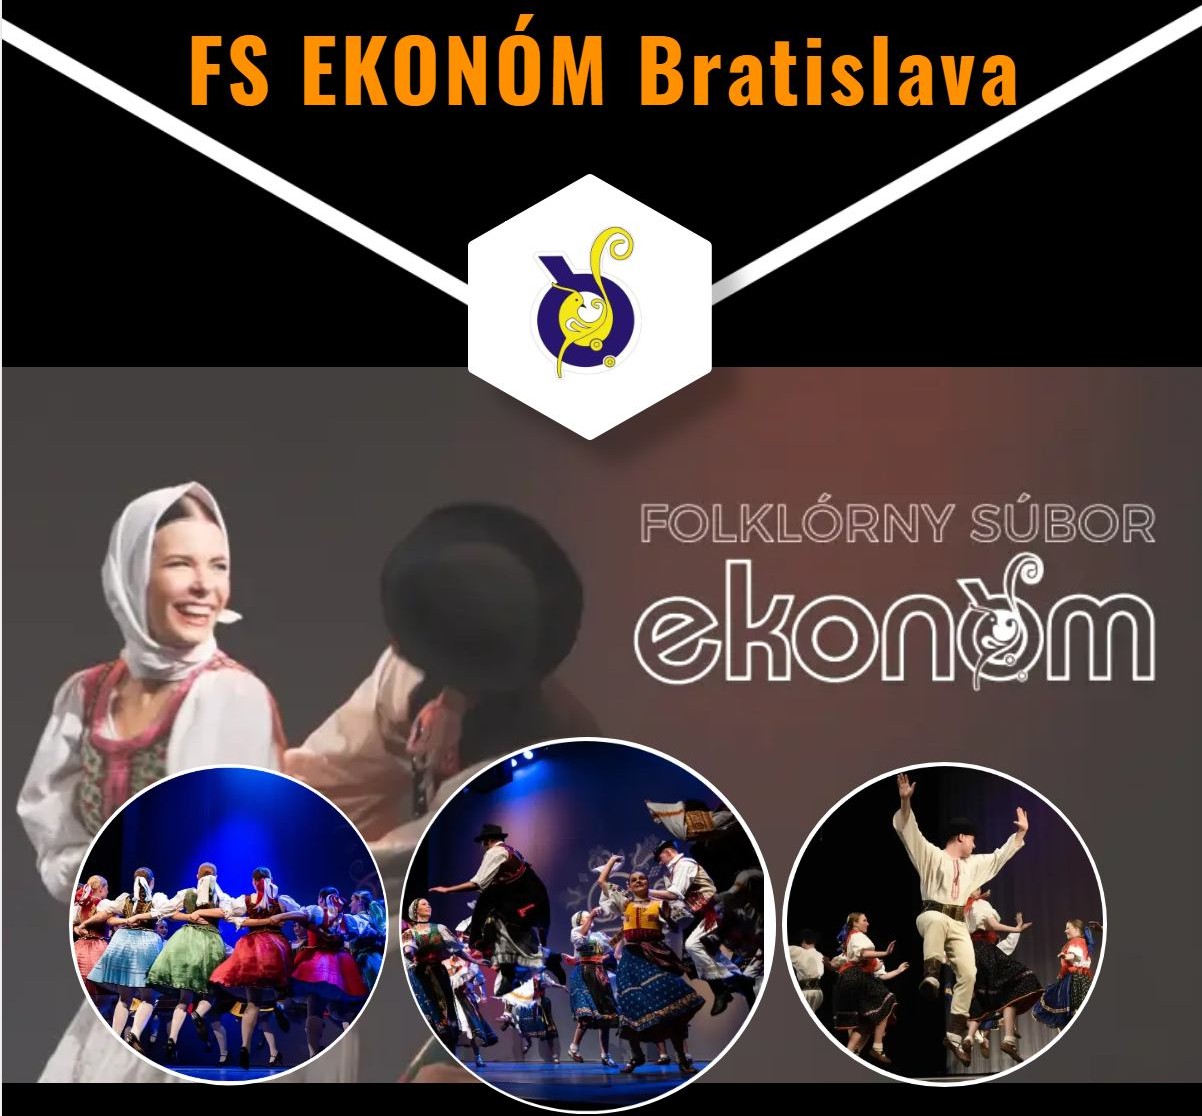 Folklorni ansambl iz Bratislave nastupa u Kovačici 7. avgusta